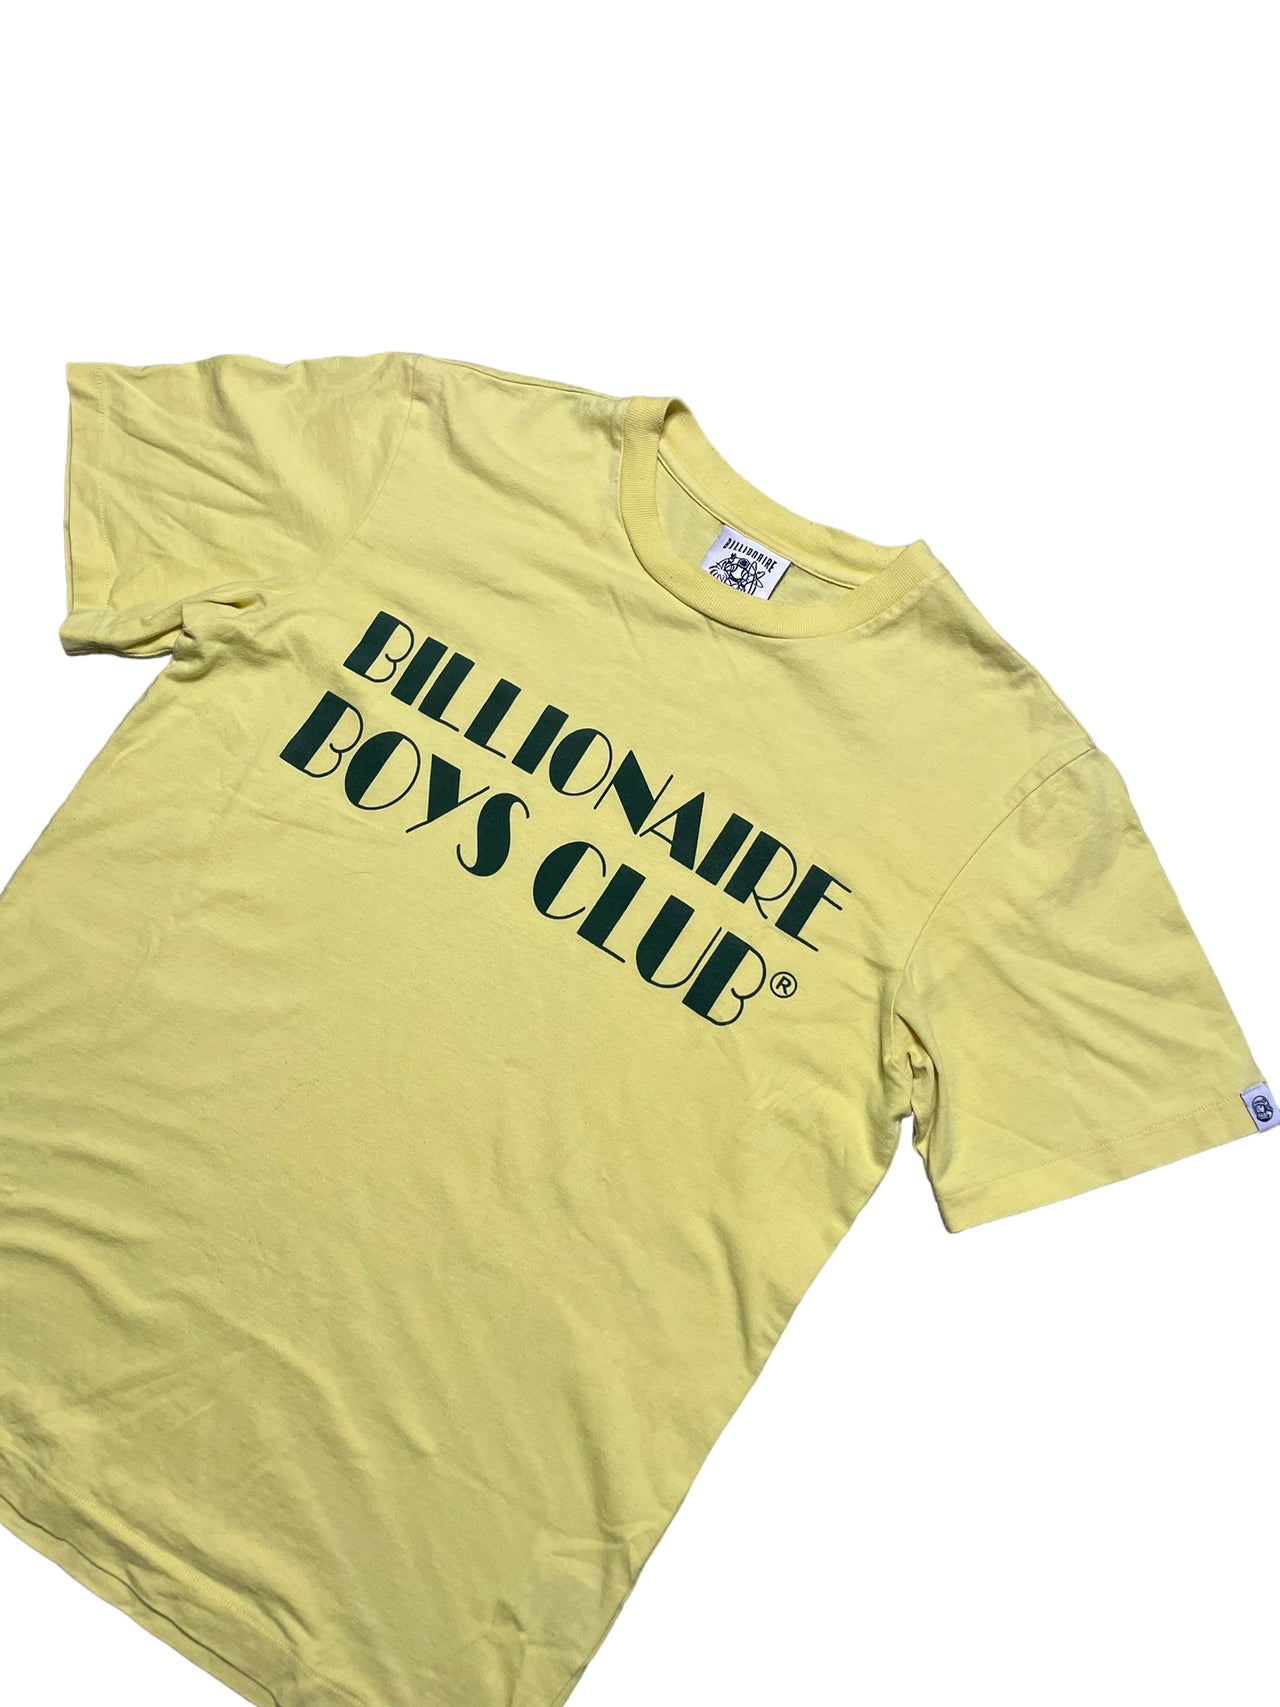 Billionaire Boys Club Spellout T-Shirt